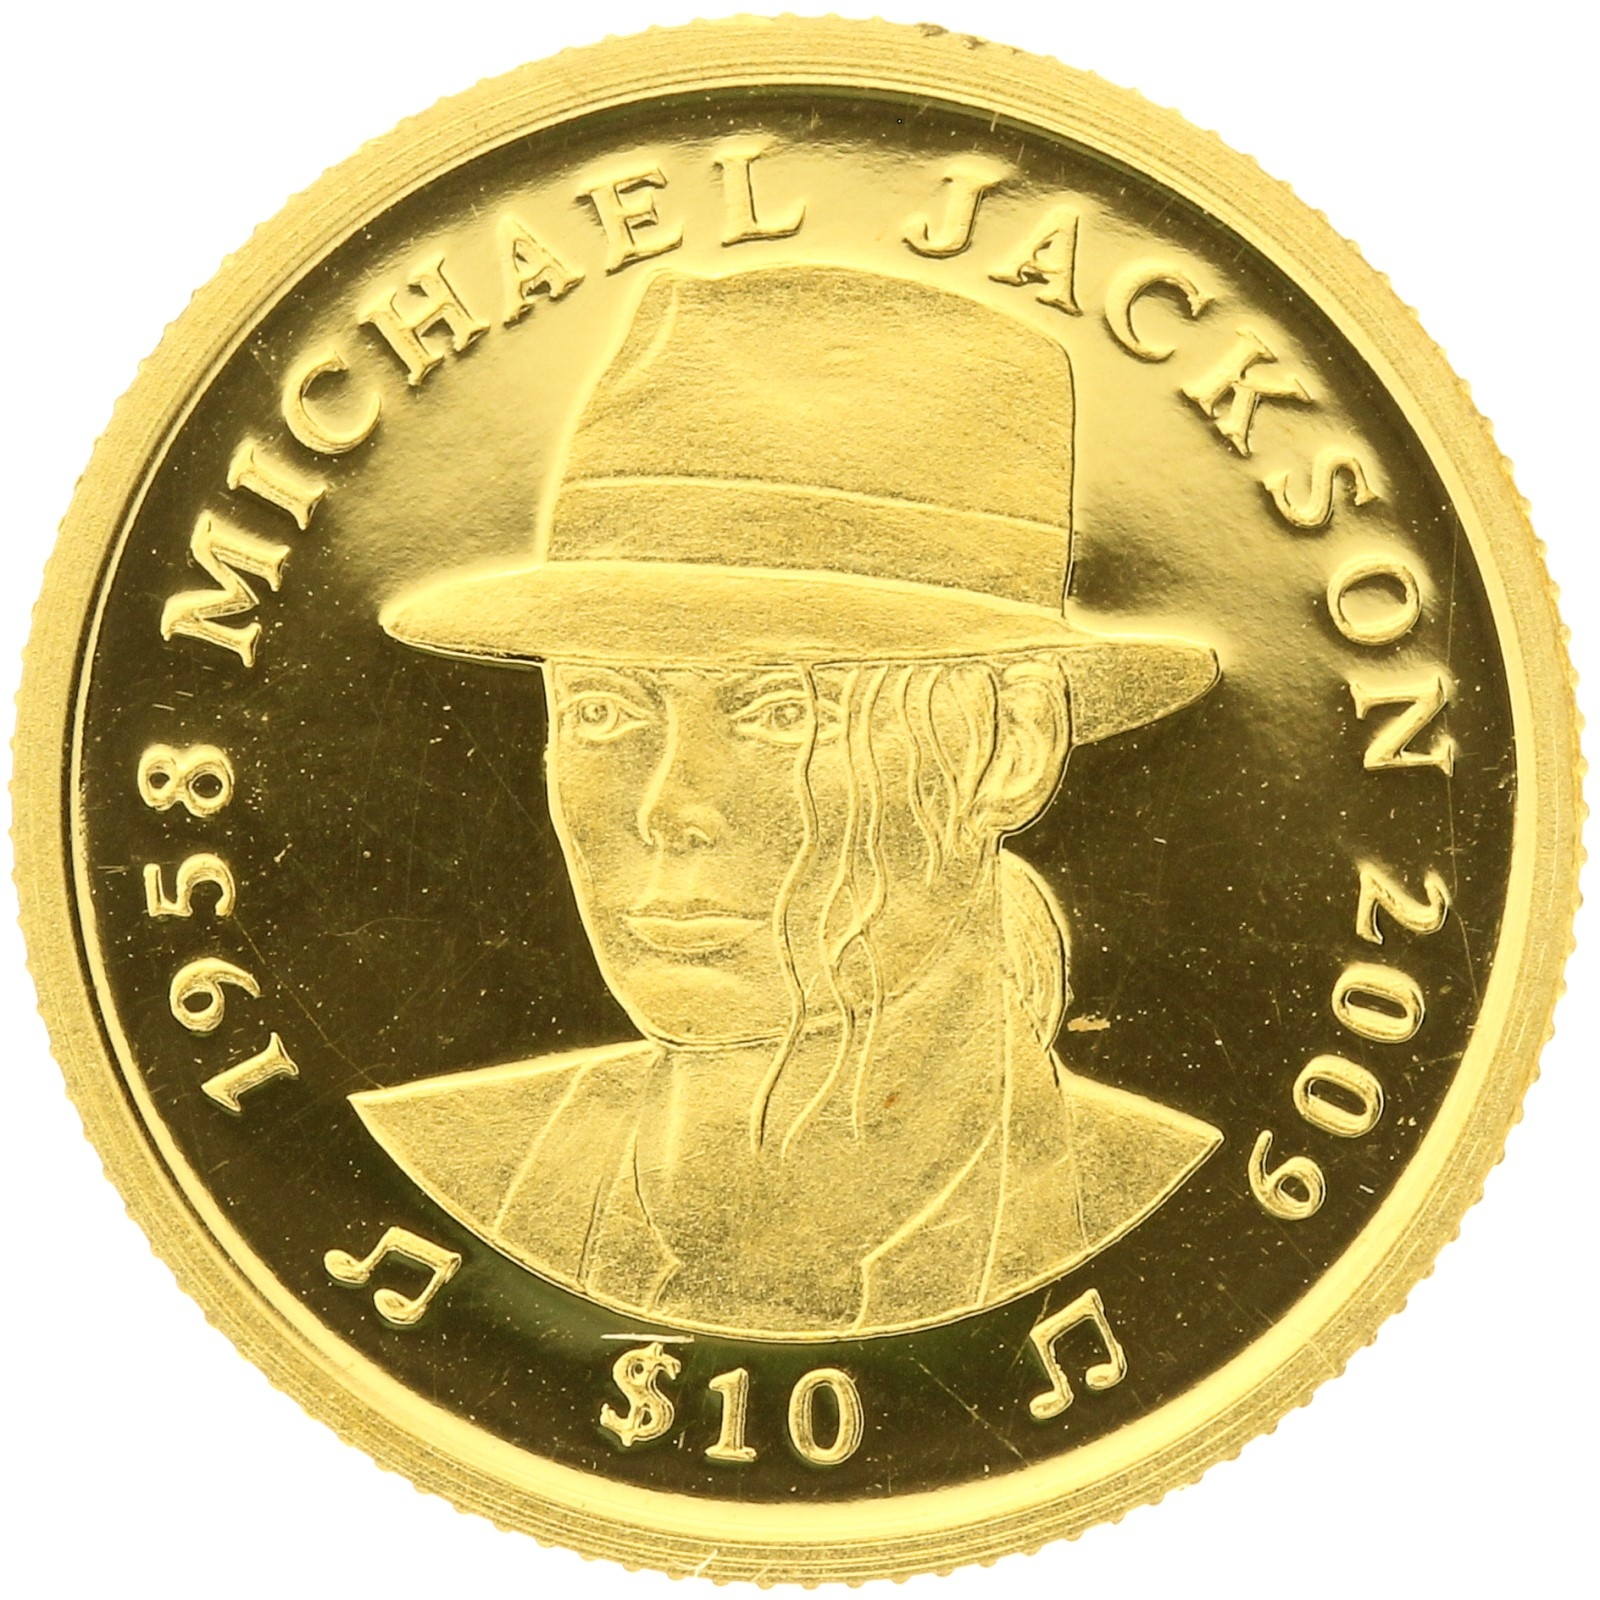 Sierra Leone - 10 dollars - 2009 - Michael Jackson - 1/25oz